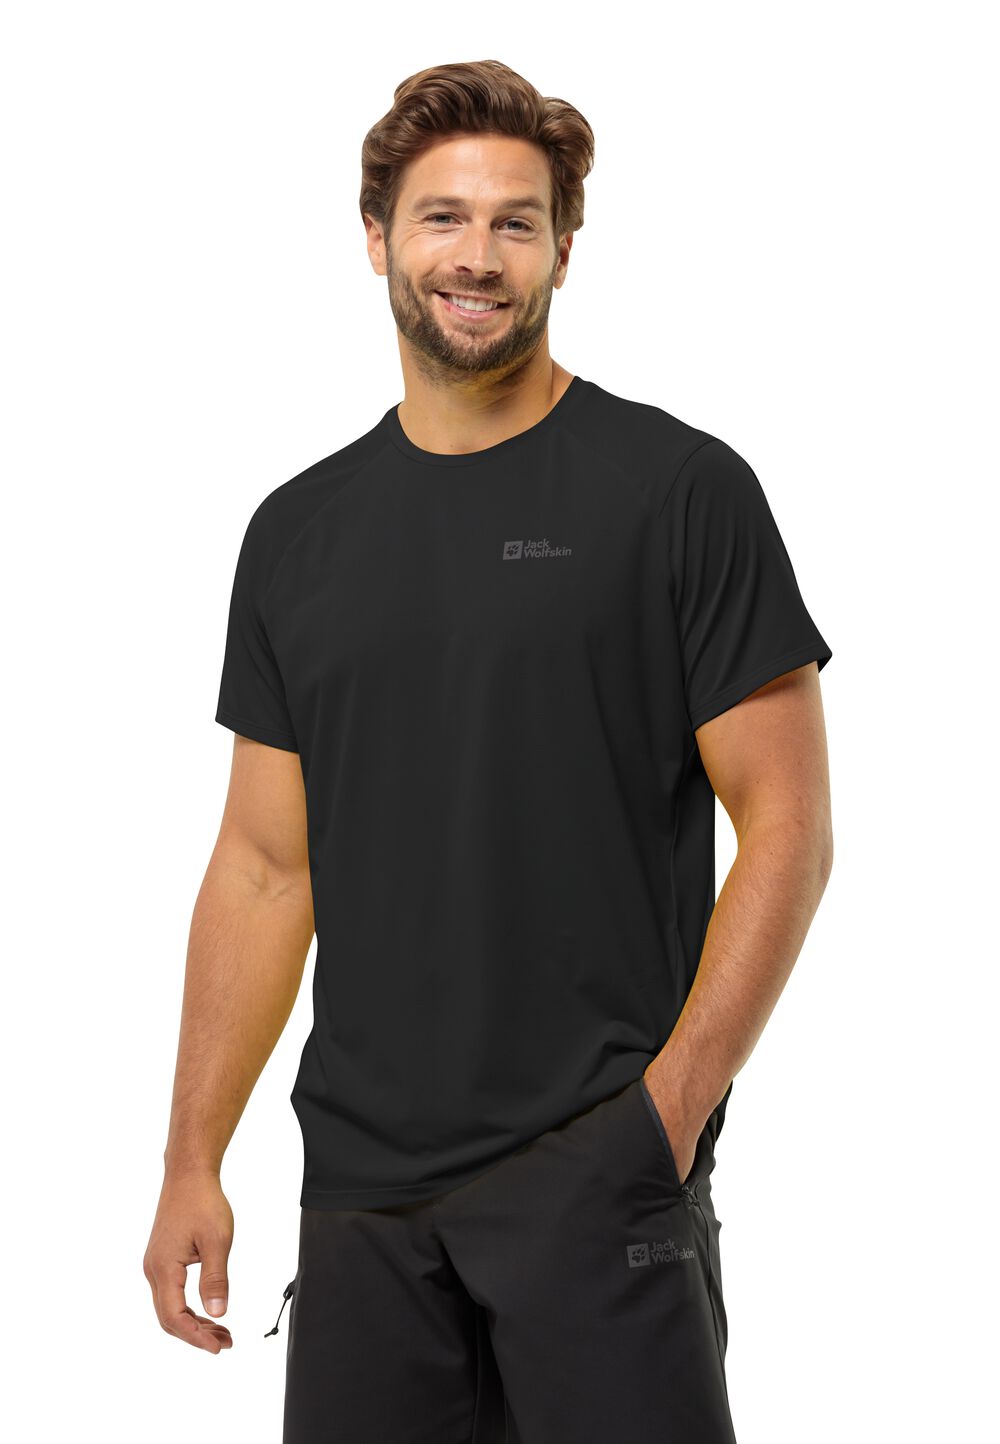 Jack Wolfskin Prelight Trail T-Shirt Men Functioneel shirt Heren S zwart black